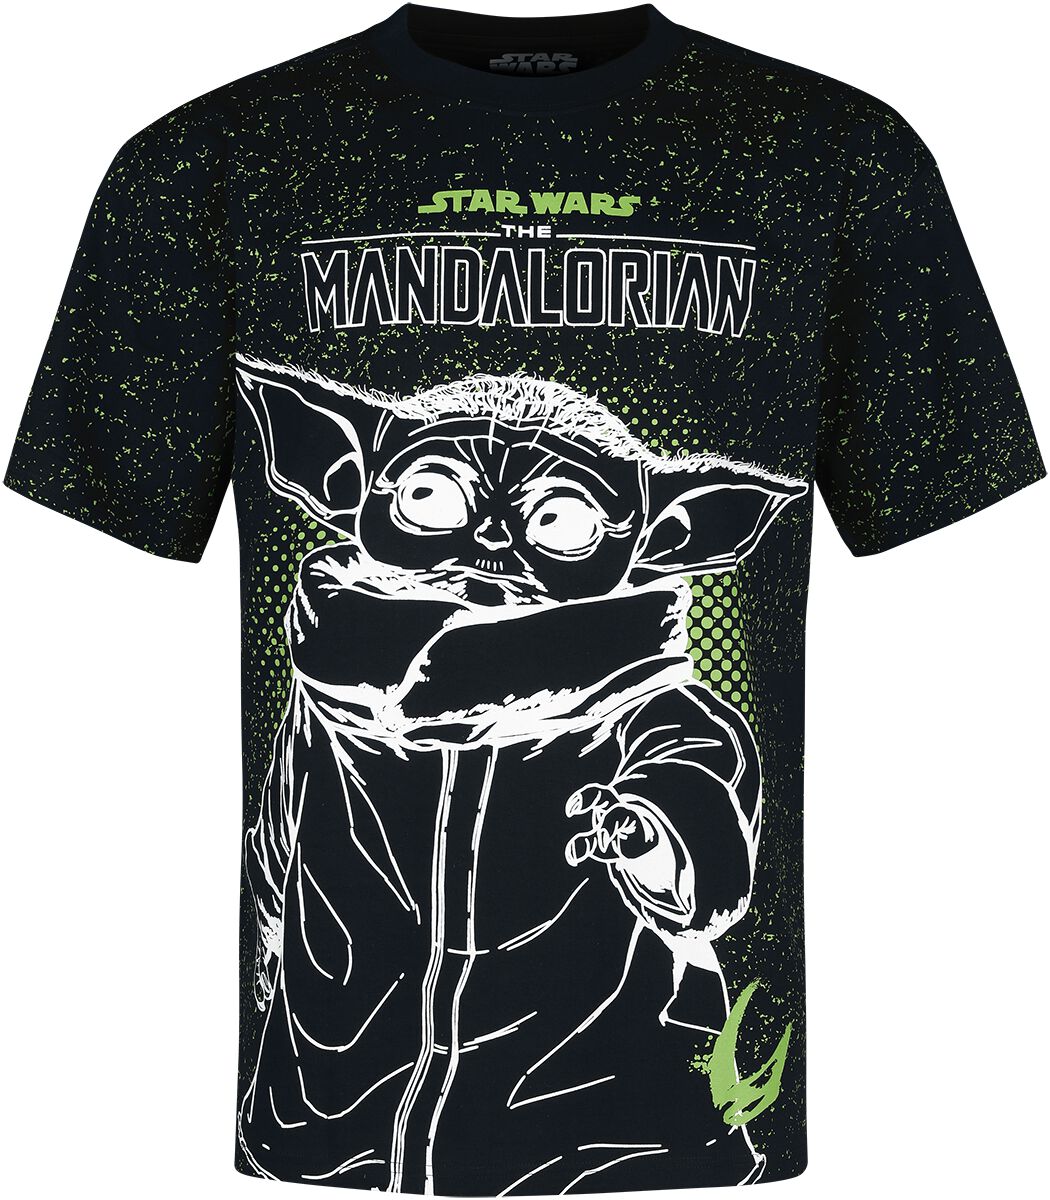 Star Wars The Mandalorian - Grogu T-Shirt multicolor in M